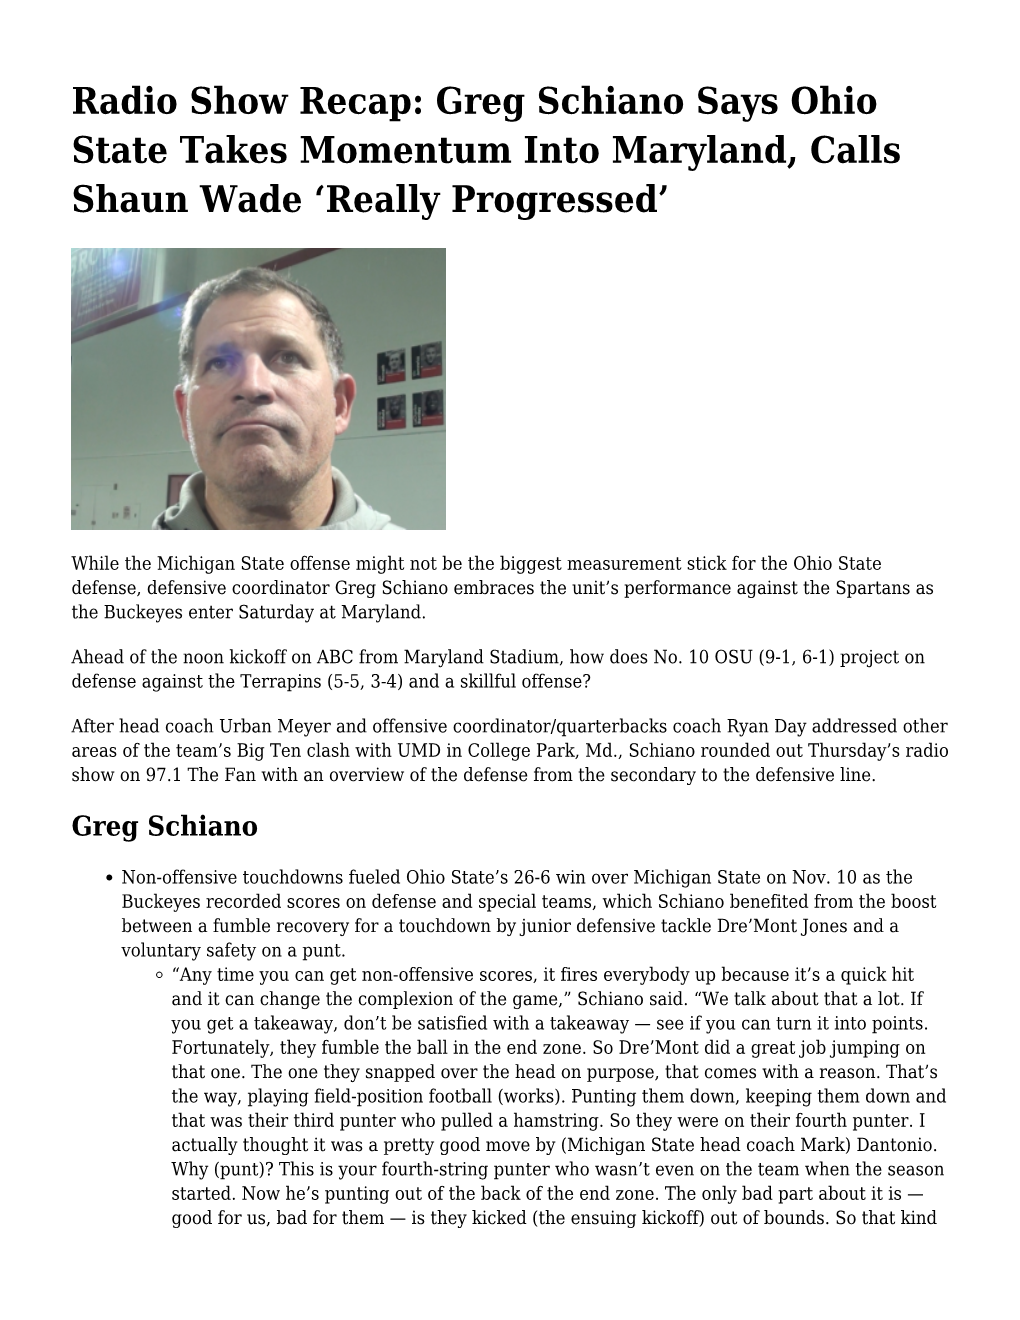 Greg Schiano Says Ohio State Takes Momentum Into Maryland, Calls Shaun Wade ‘Really Progressed’